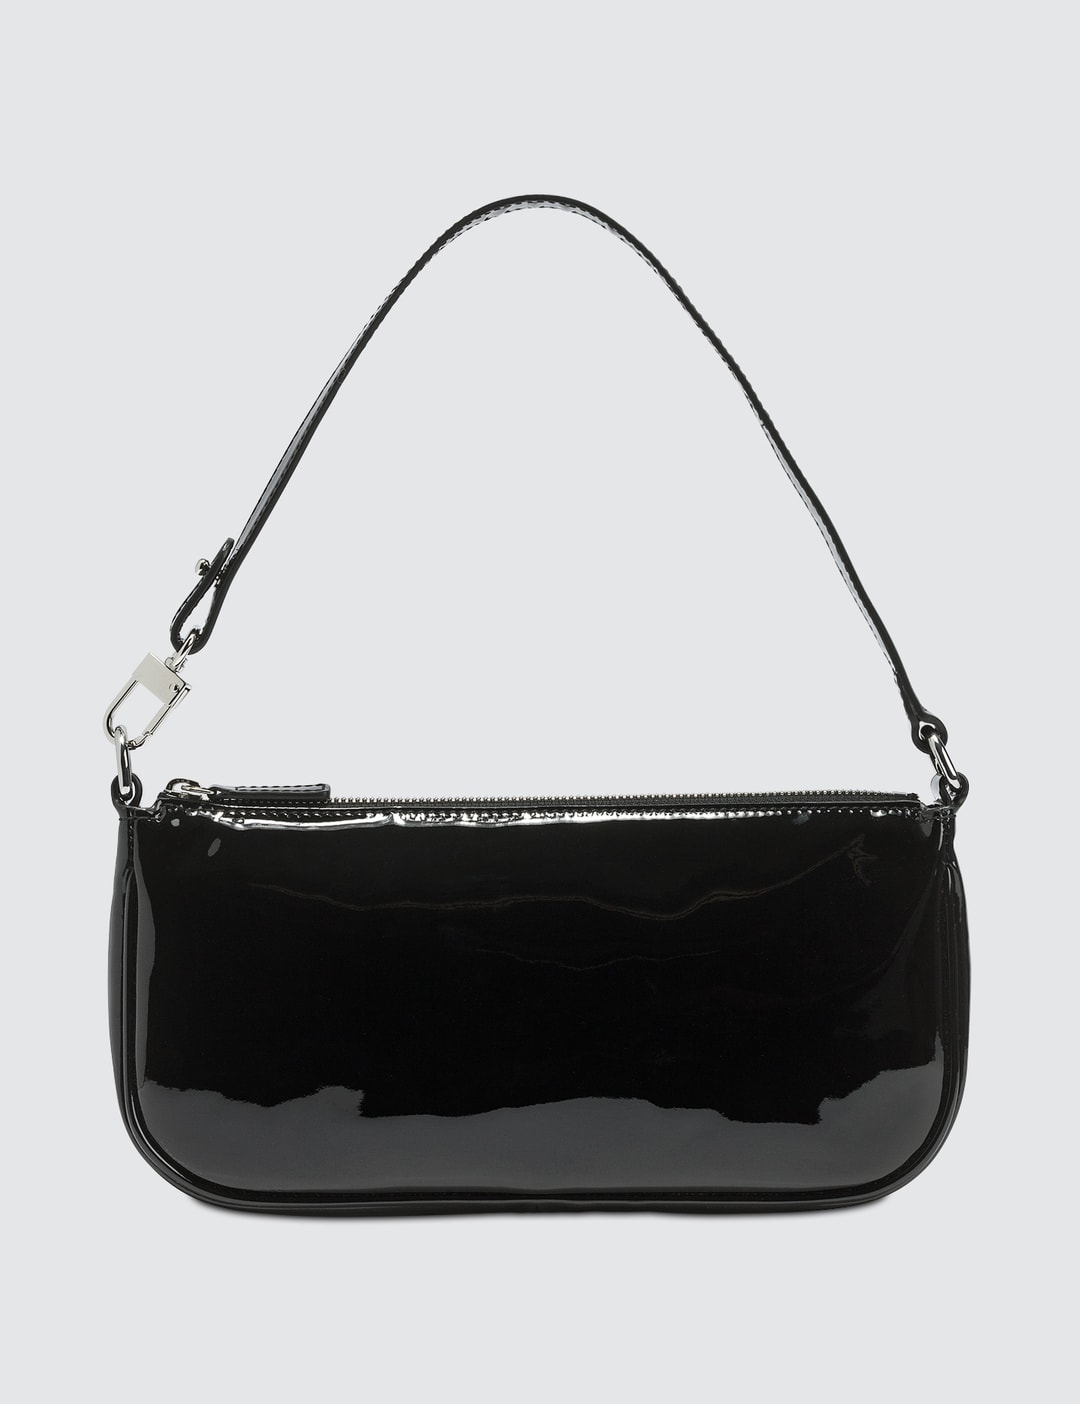 BY FAR, Bags, By Far Rachel Black Stud Leather Shoulder Bag